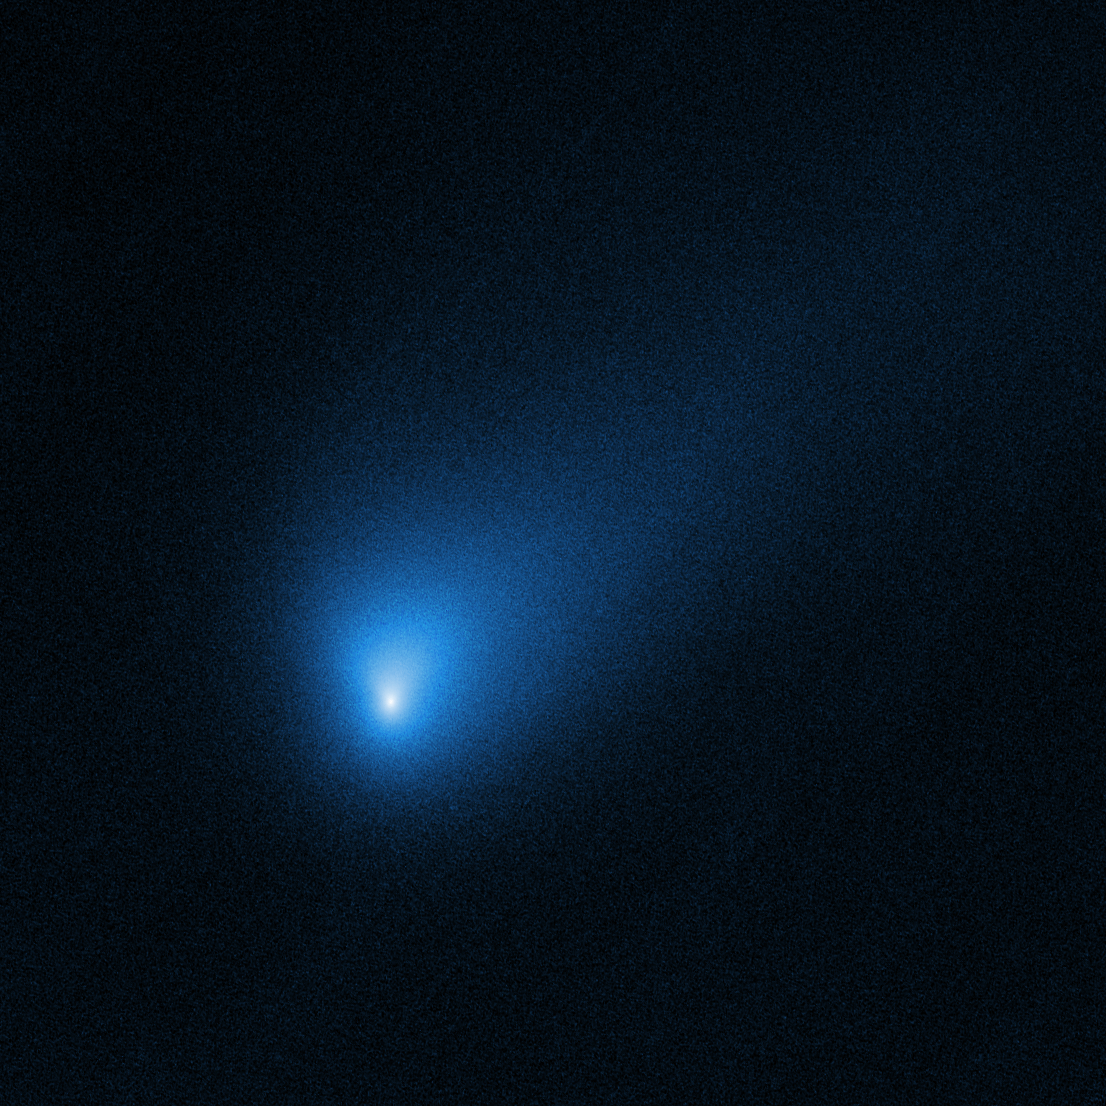 Comet 2i/borisov as seen by hubble